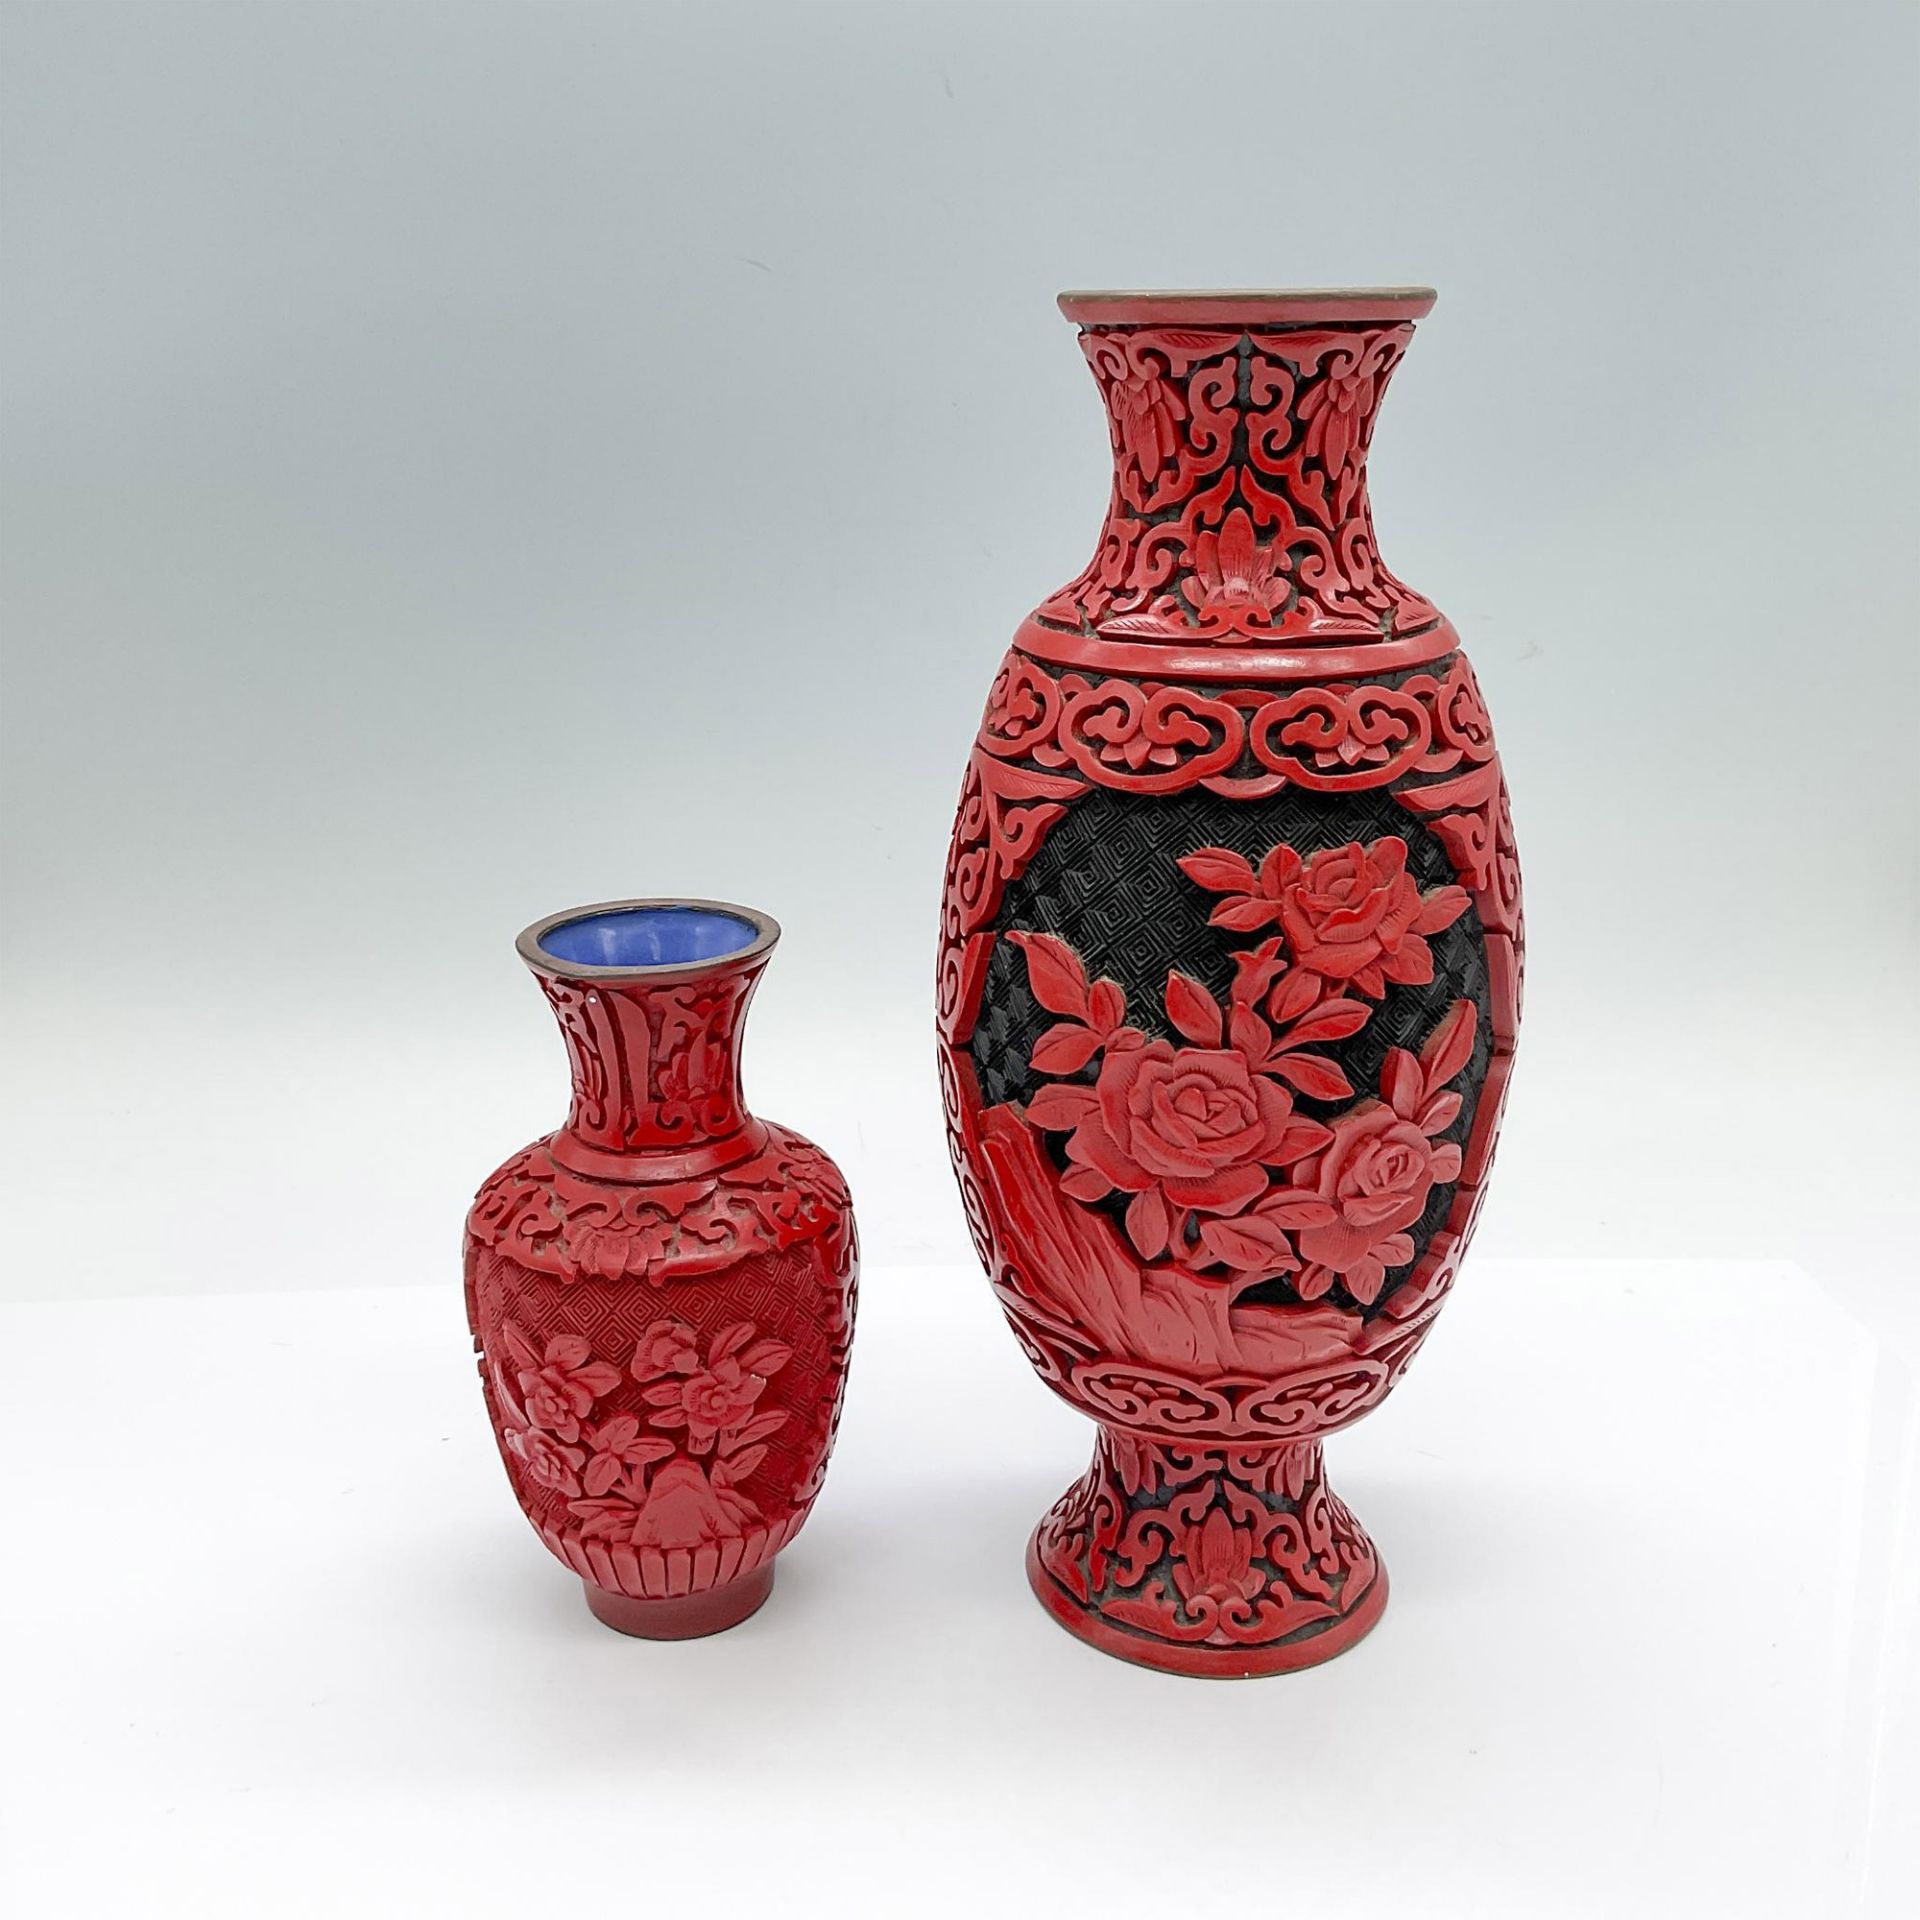 2pc Vintage Chinese Cinnabar Floral Vases - Image 2 of 3